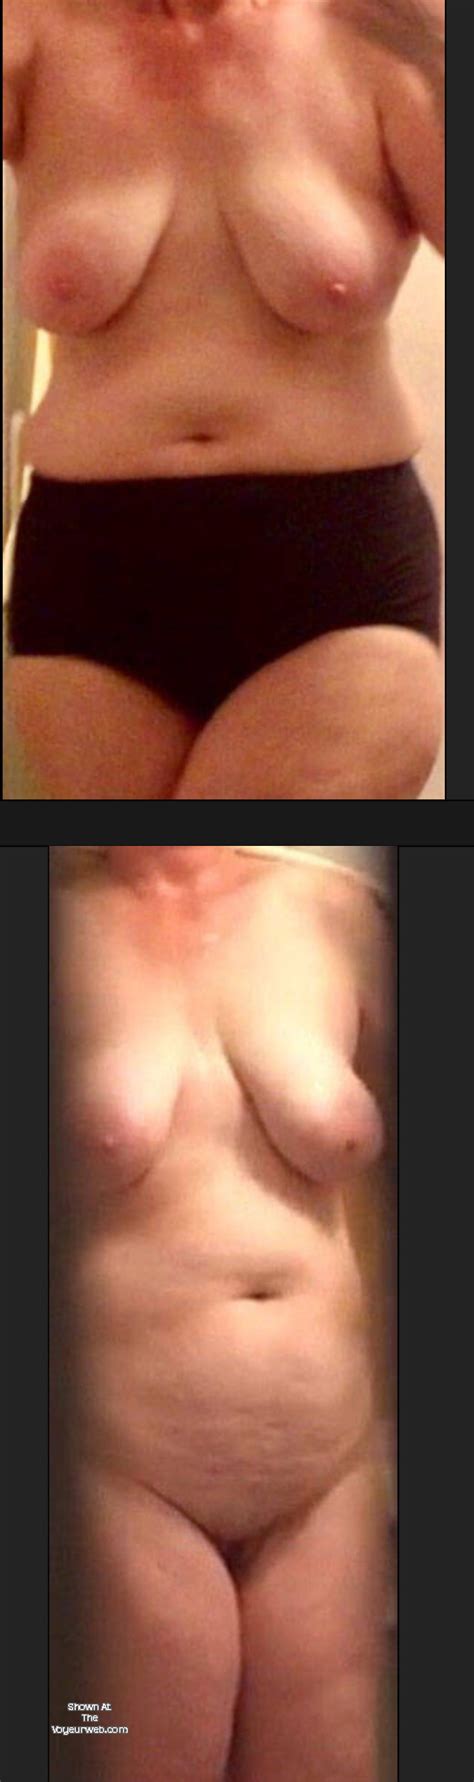 Large Tits Of My Wife Tammy July 2020 Voyeur Web